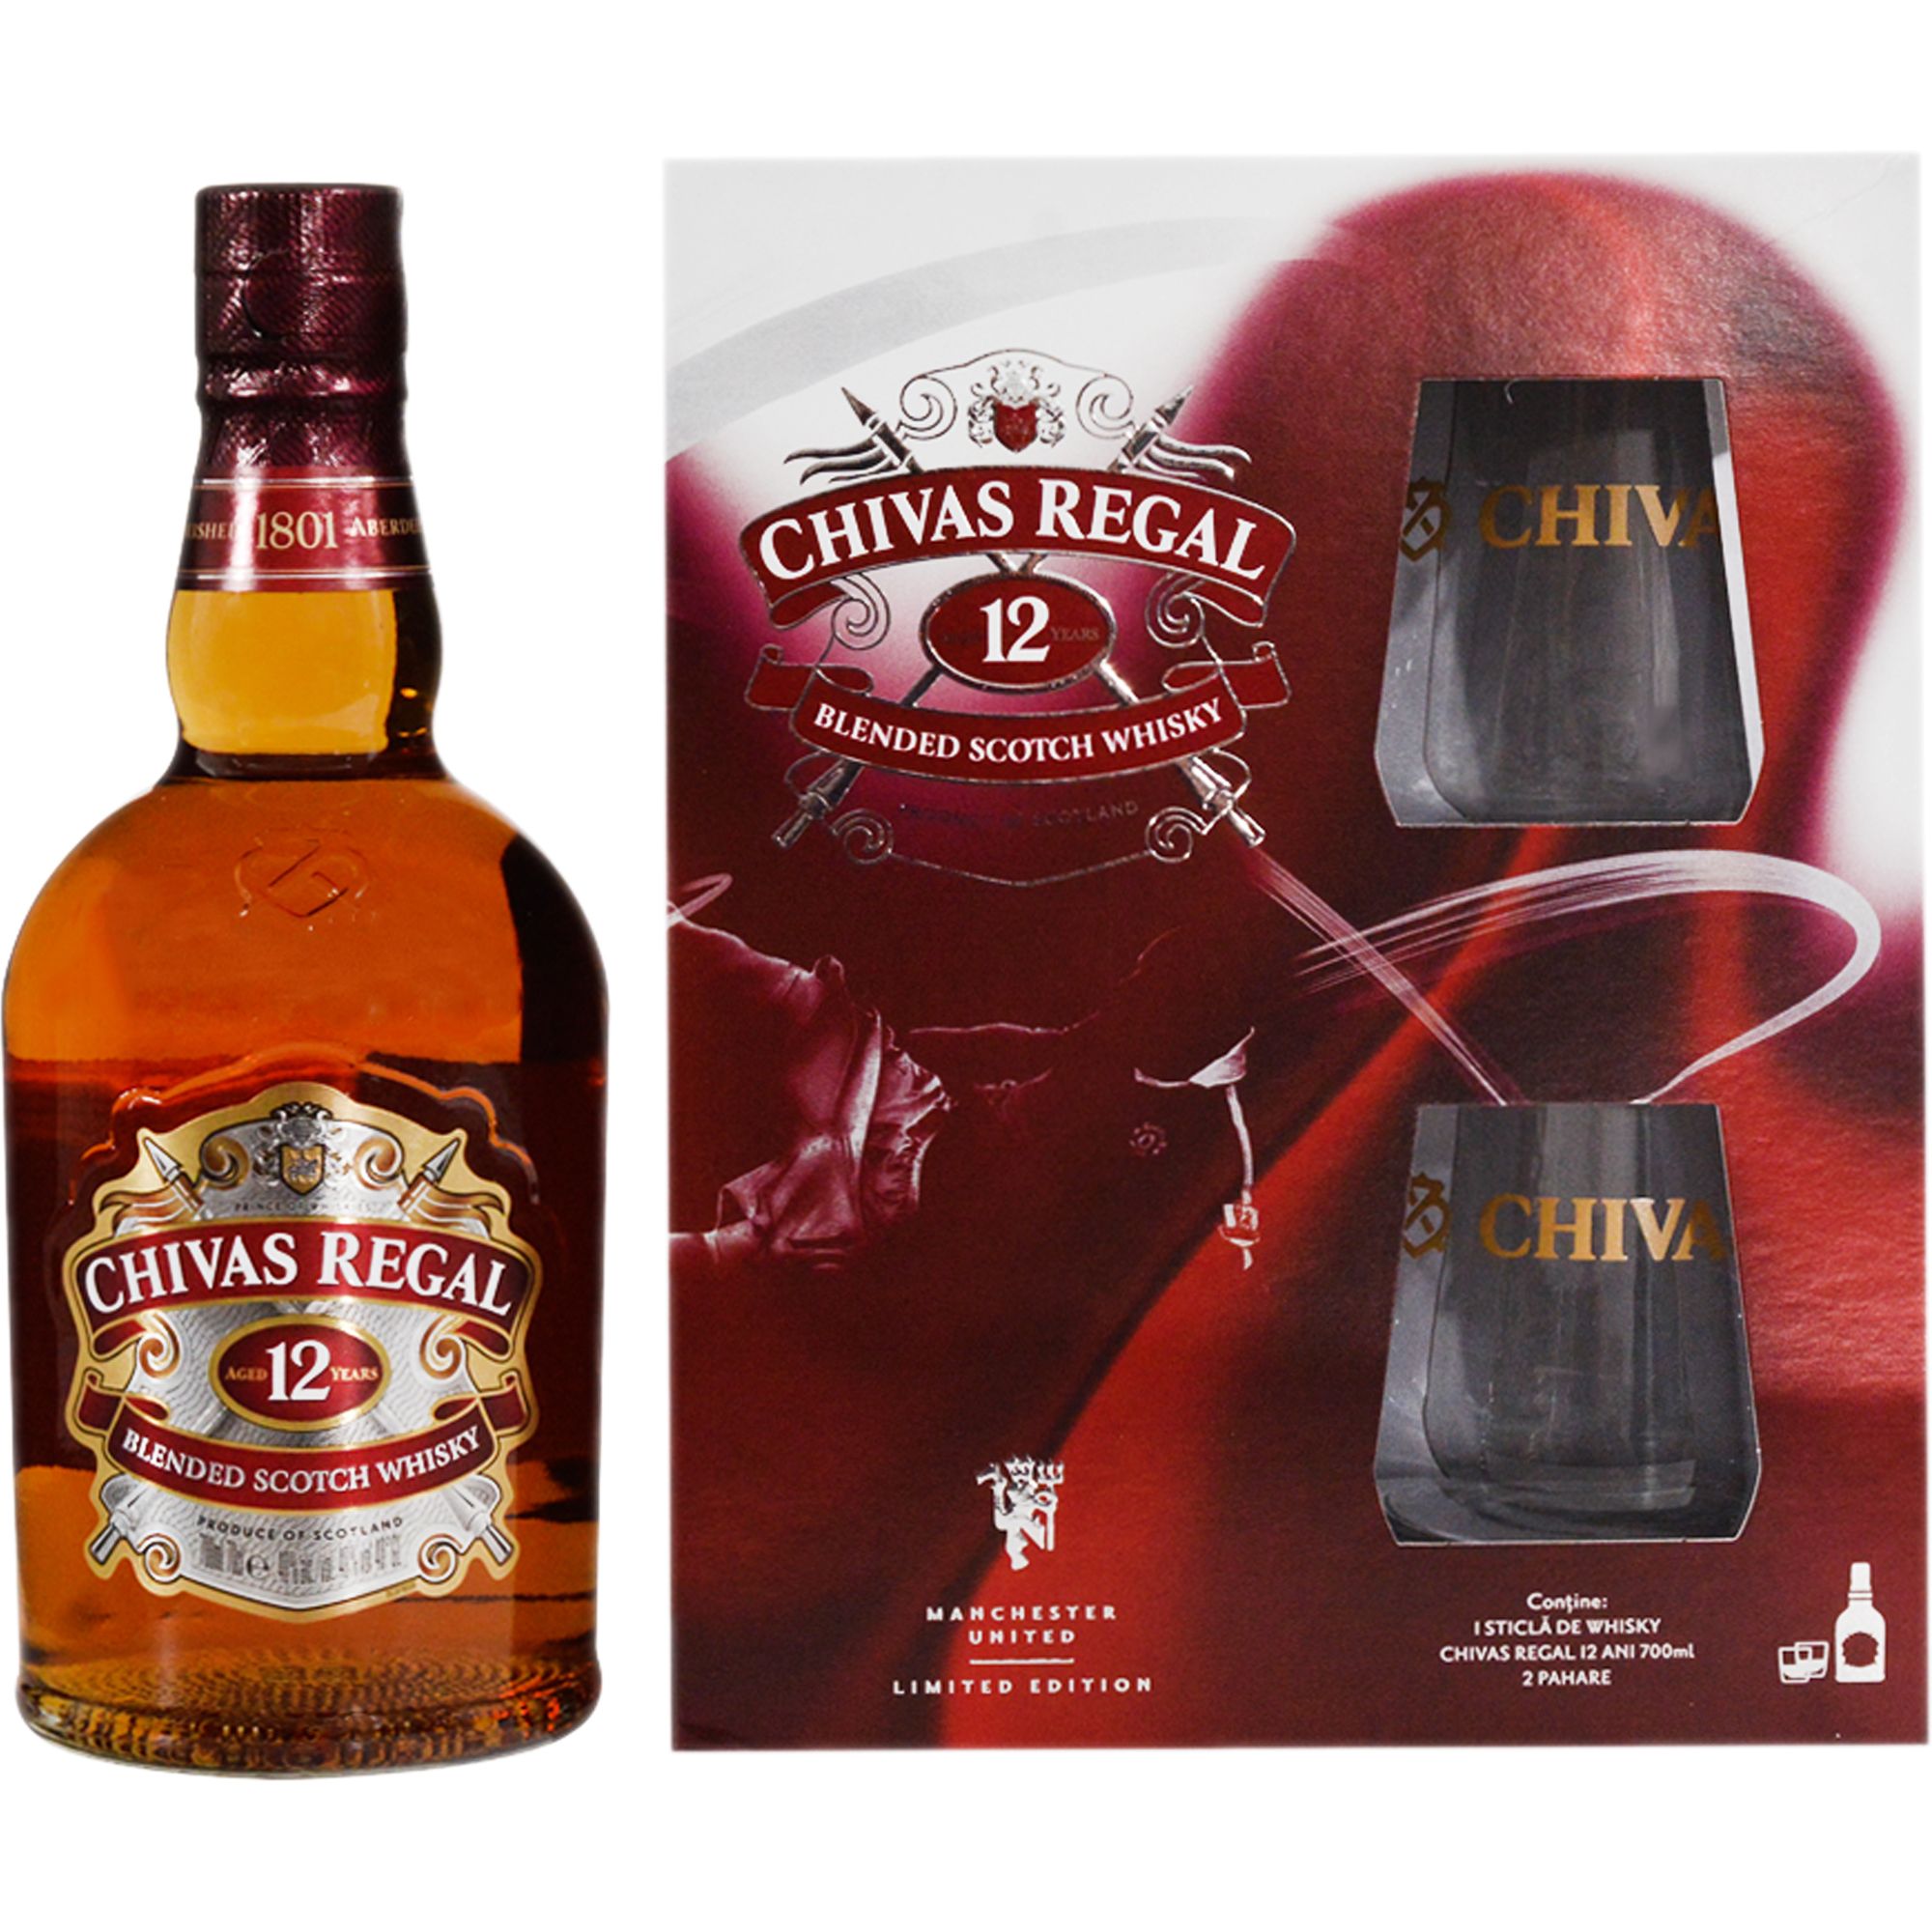 Chivas regal 0.7 цена. Chivas Regal 12 красная коробка. Chivas Regal 12 Blended Scotch. Chivas Regal 12 Blended Scotch Whisky 0.7. Чивас 12 красный.